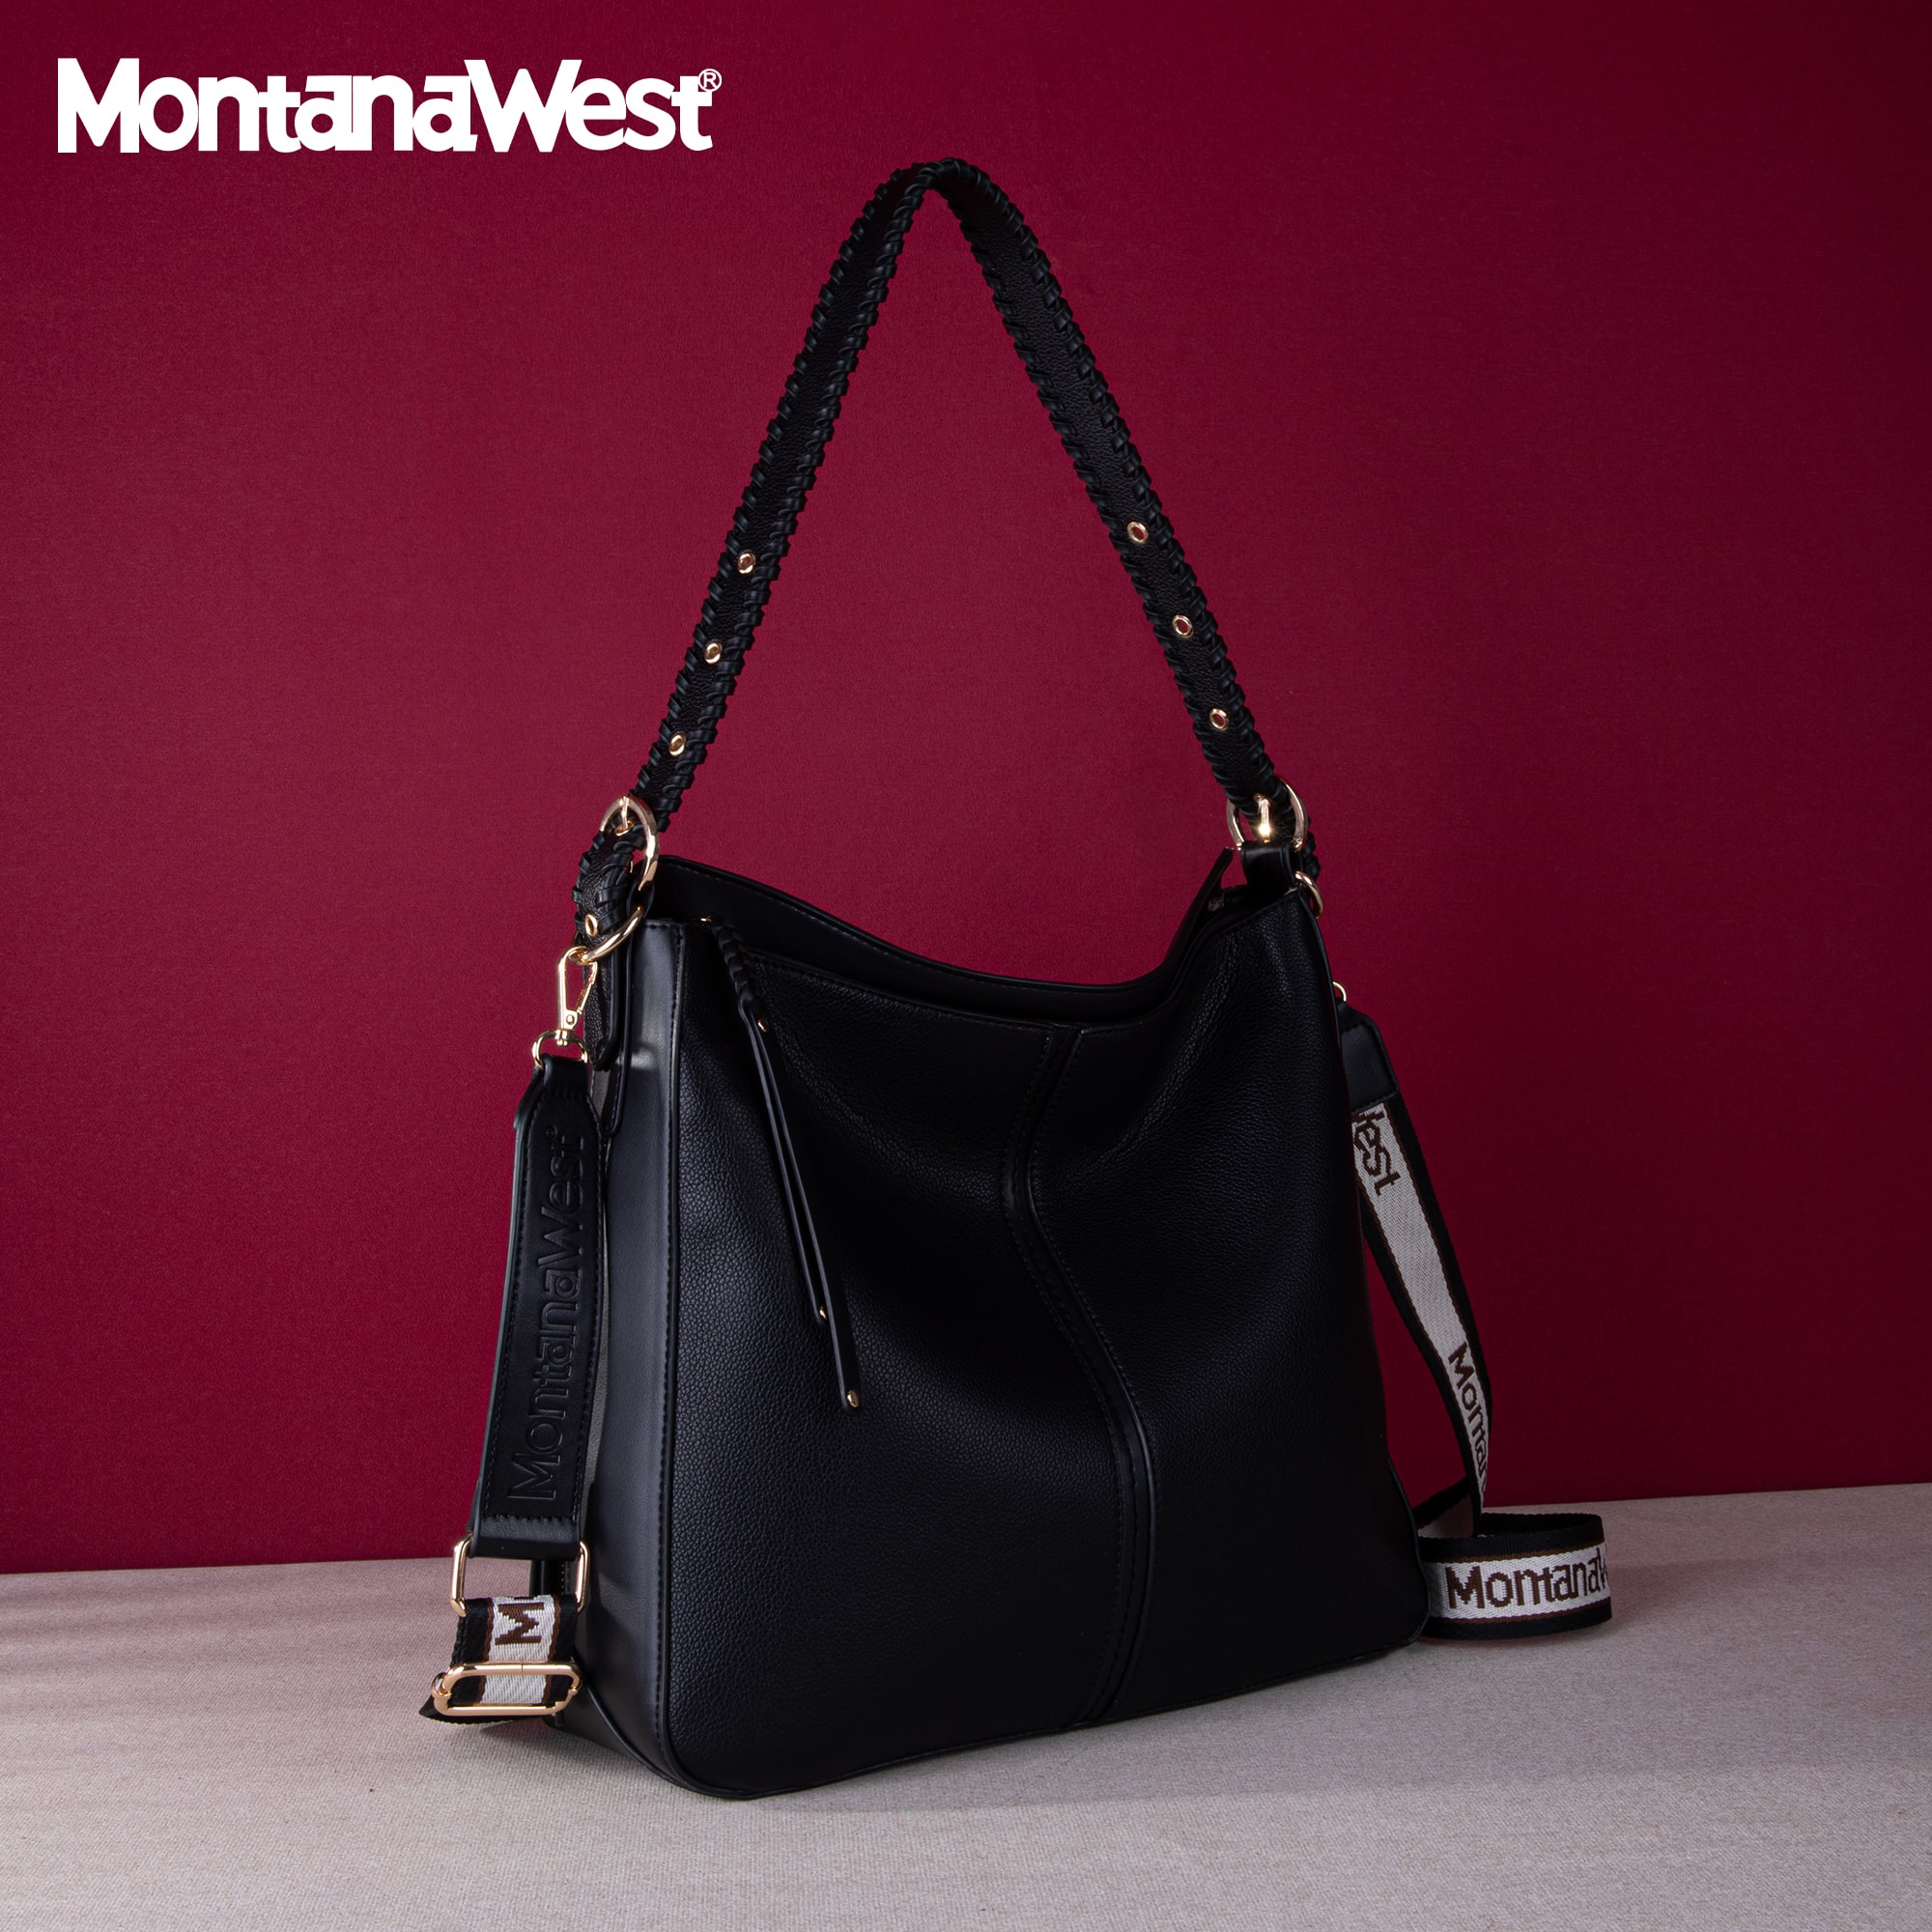 

Montana West Hobo Handbag For Women Large Purses And Handbags With Studs And Crossbody Strap